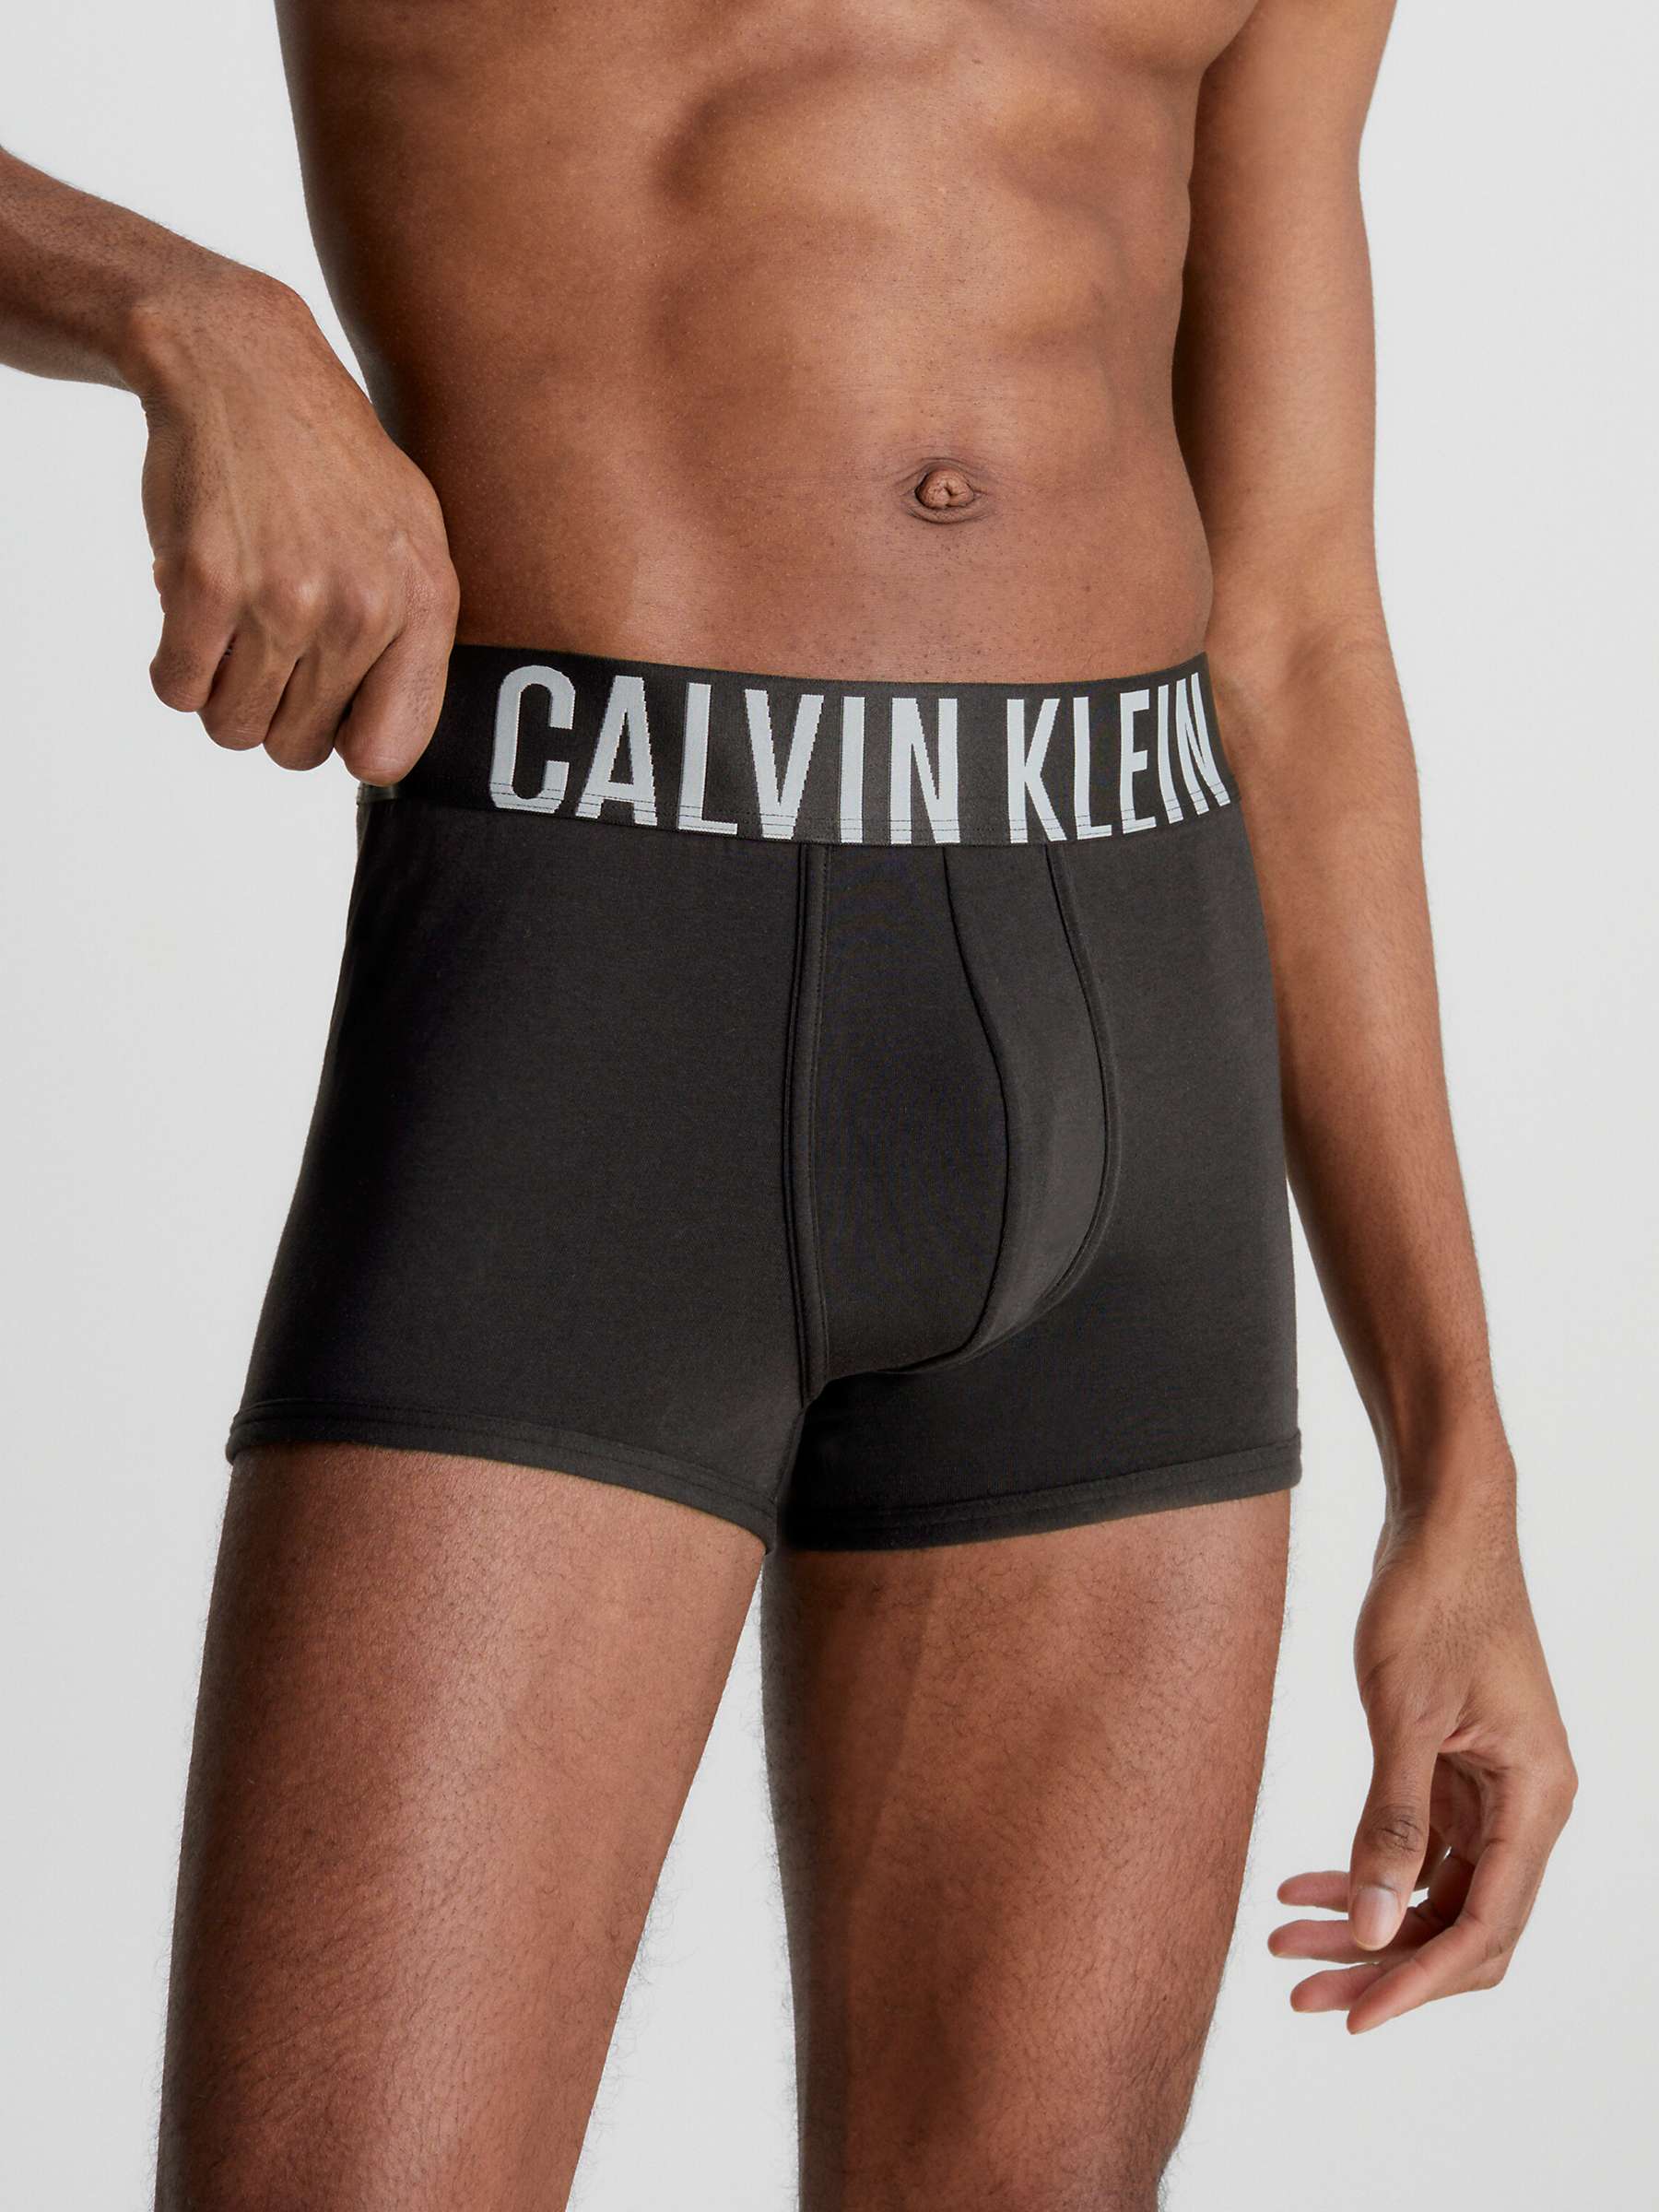 Calvin Klein Intense Power Cotton Stretch Trunks, Pack of 2, Black at John  Lewis & Partners